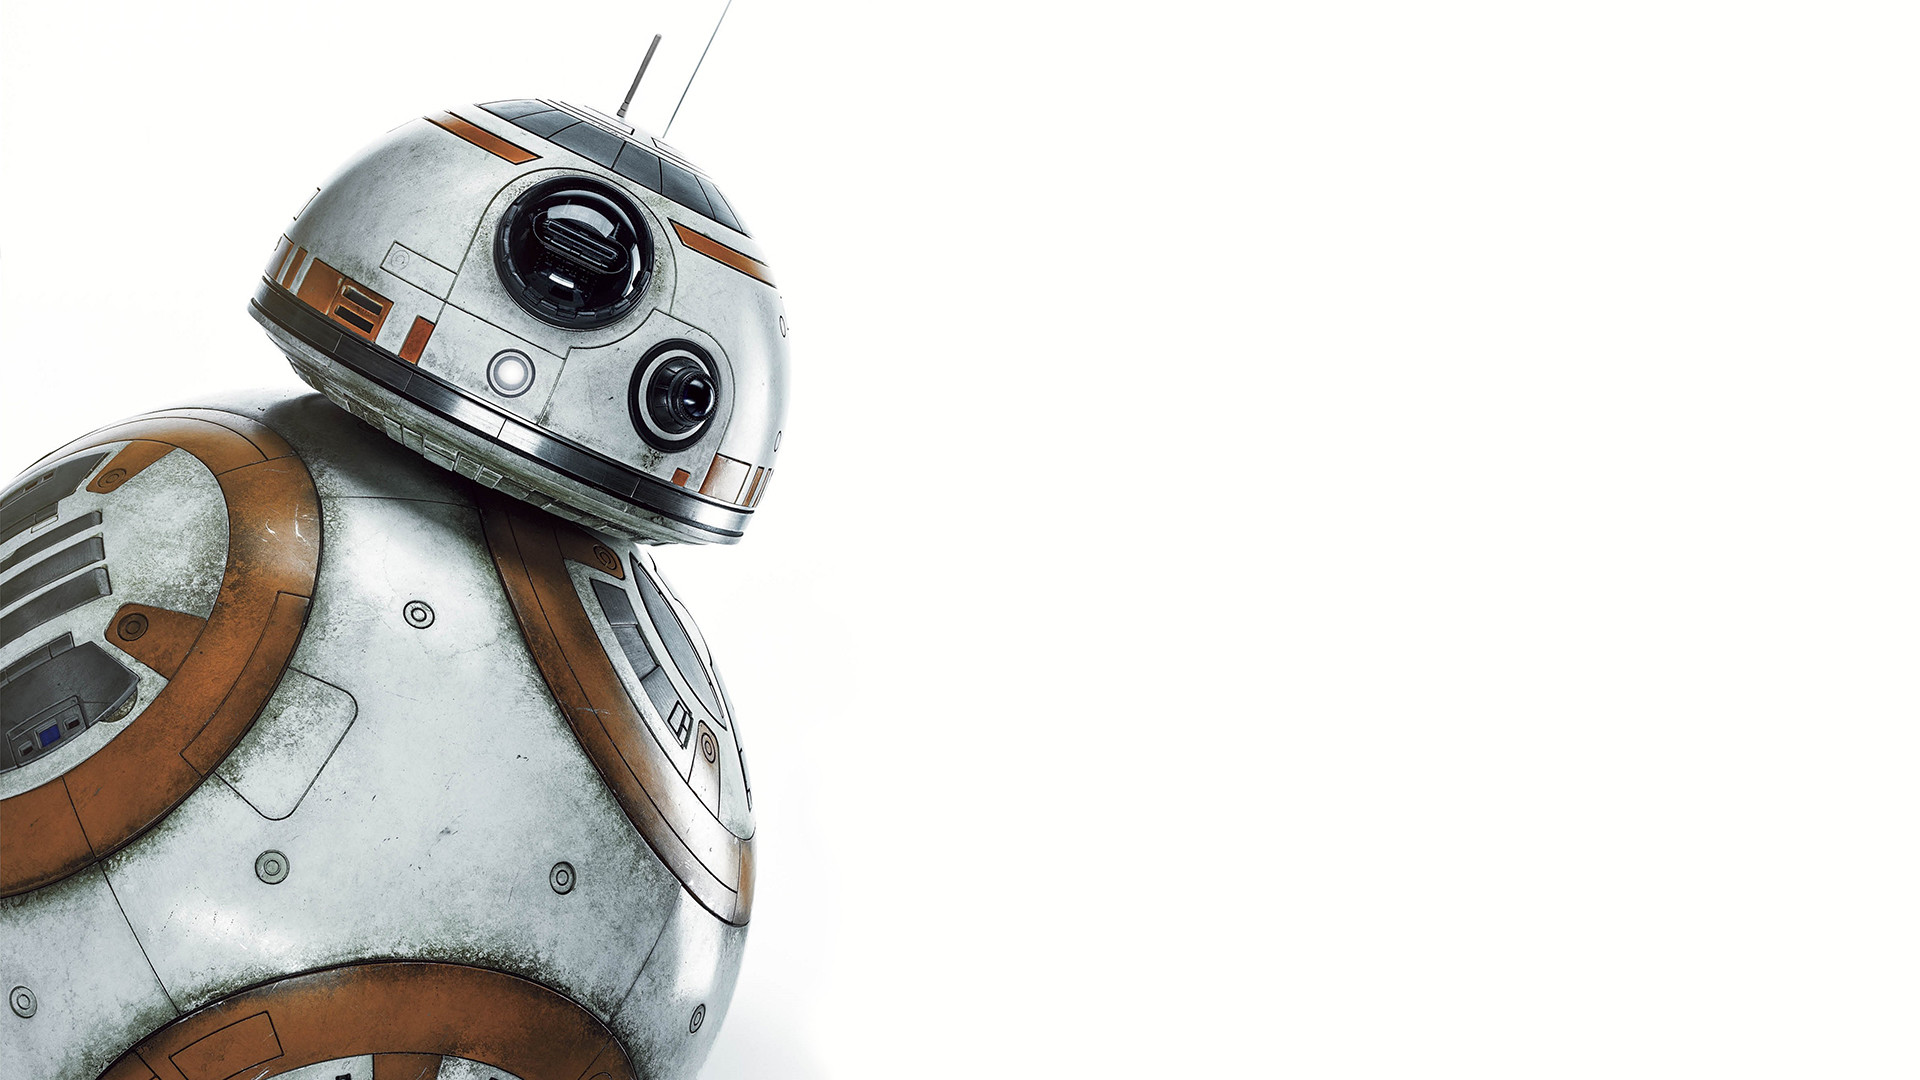 Star Wars The Force Awakens Desktop Wallpapers